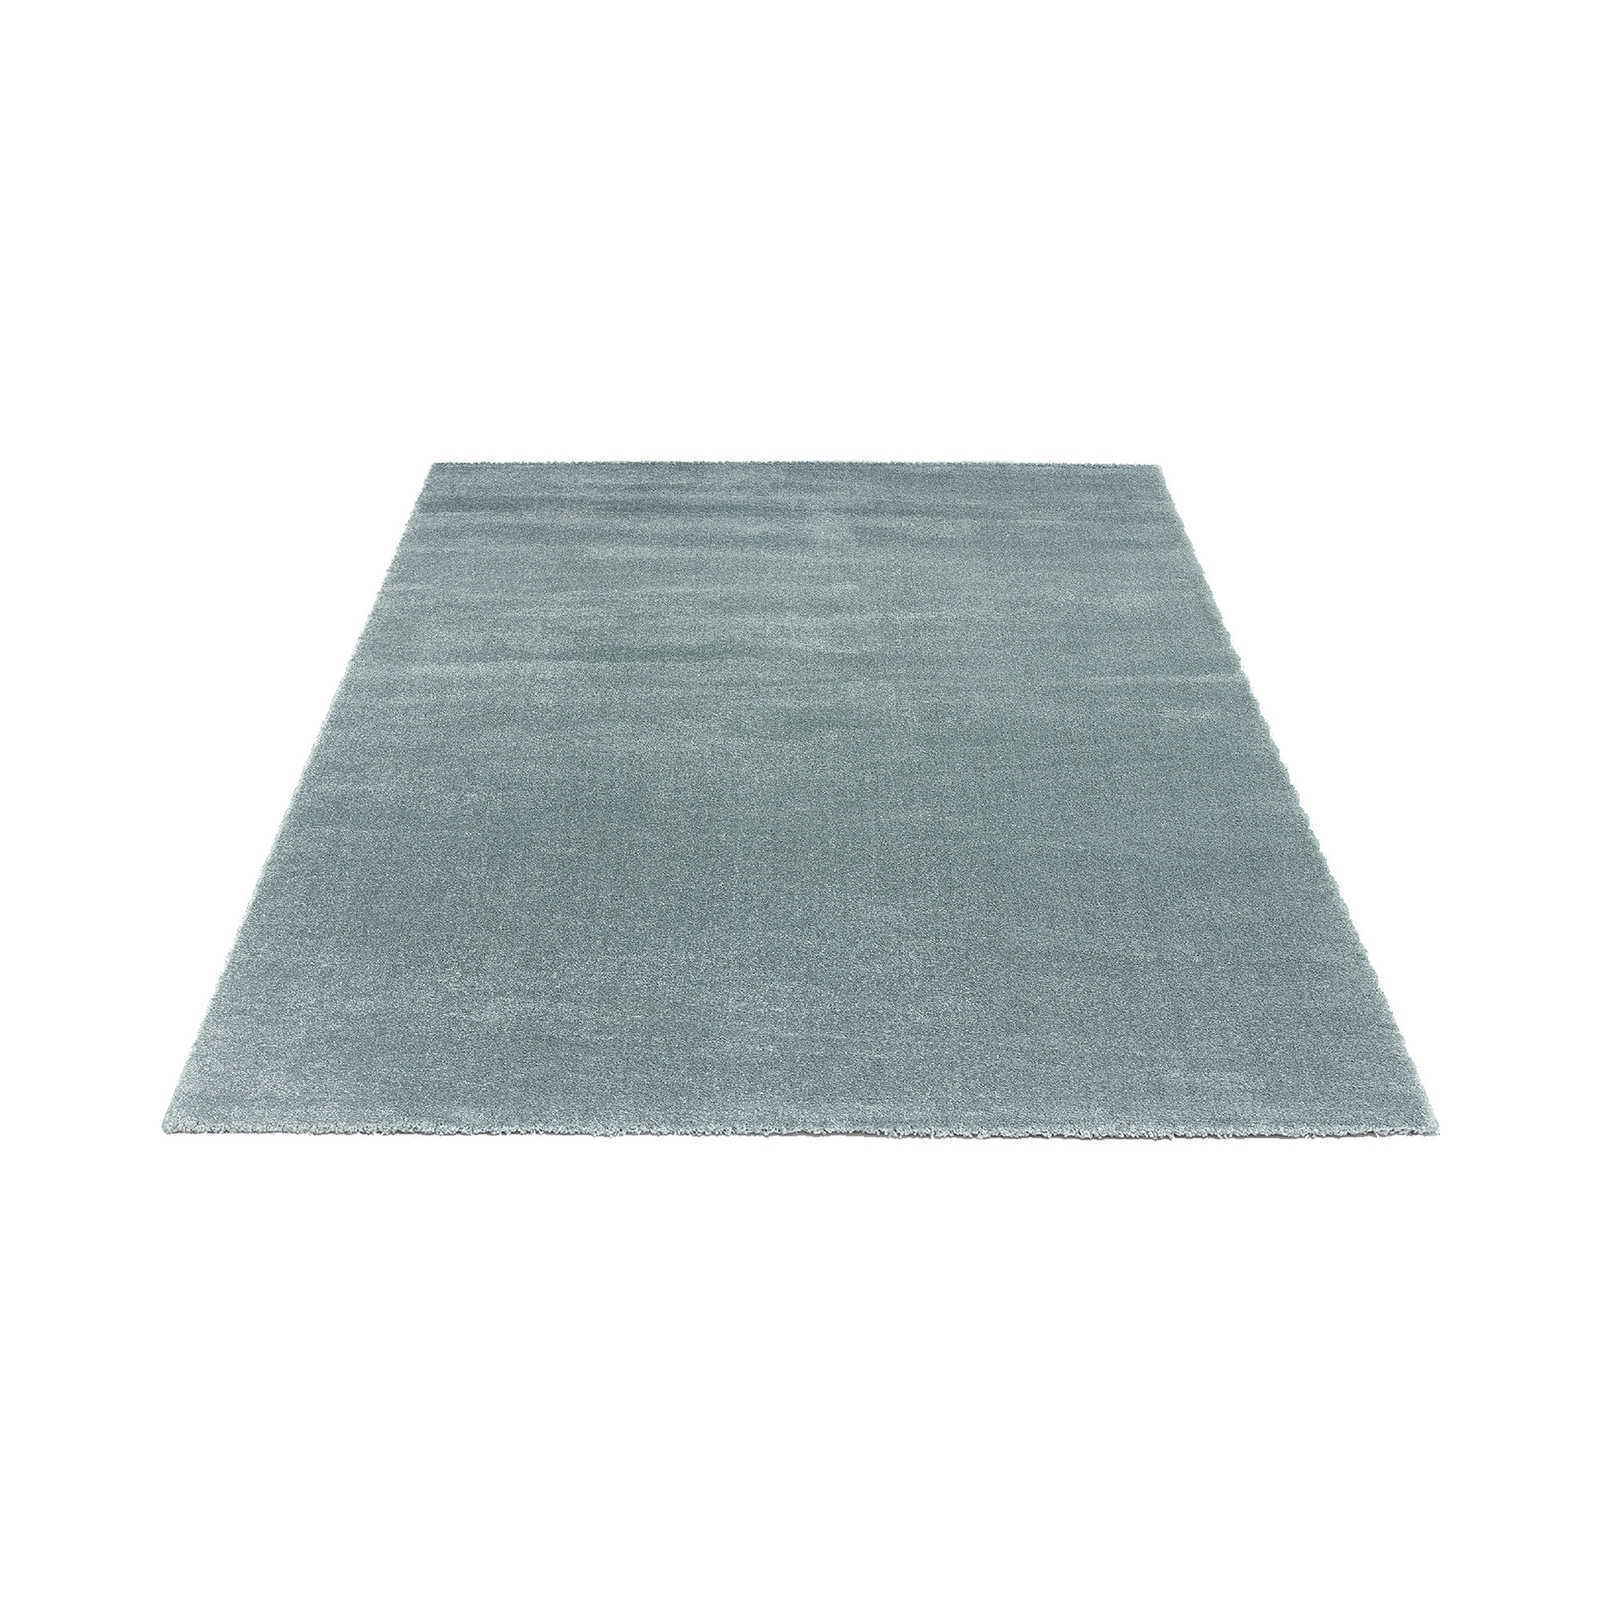 Simple short pile carpet in blue - 230 x 160 cm
